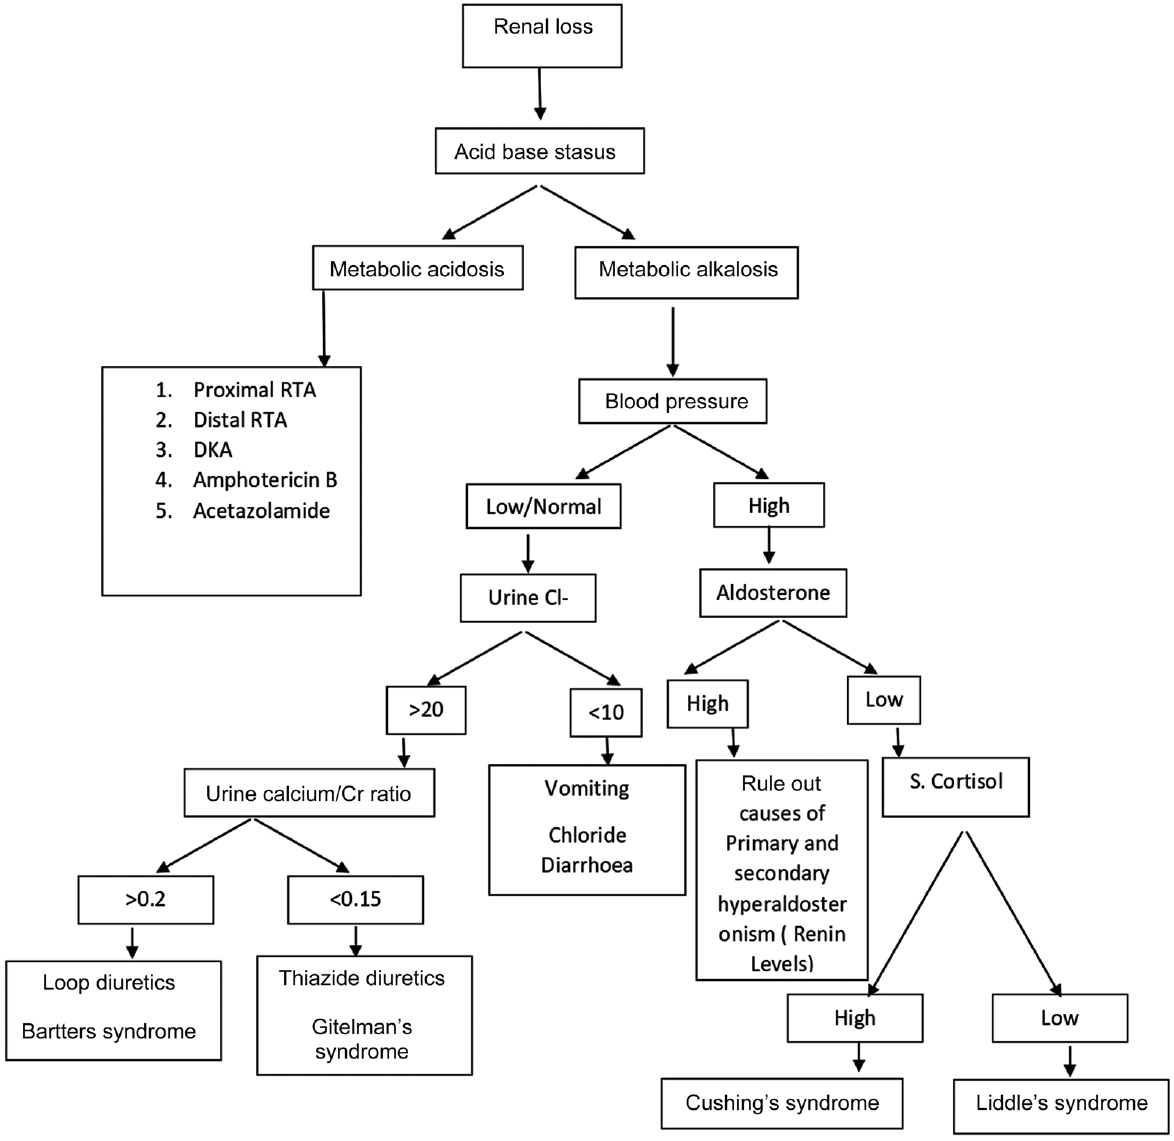 Evaluation of renal causes of hypokalemia. DKA, Diabetic Ketoacidosis; RTA, renal tubular acidosis.